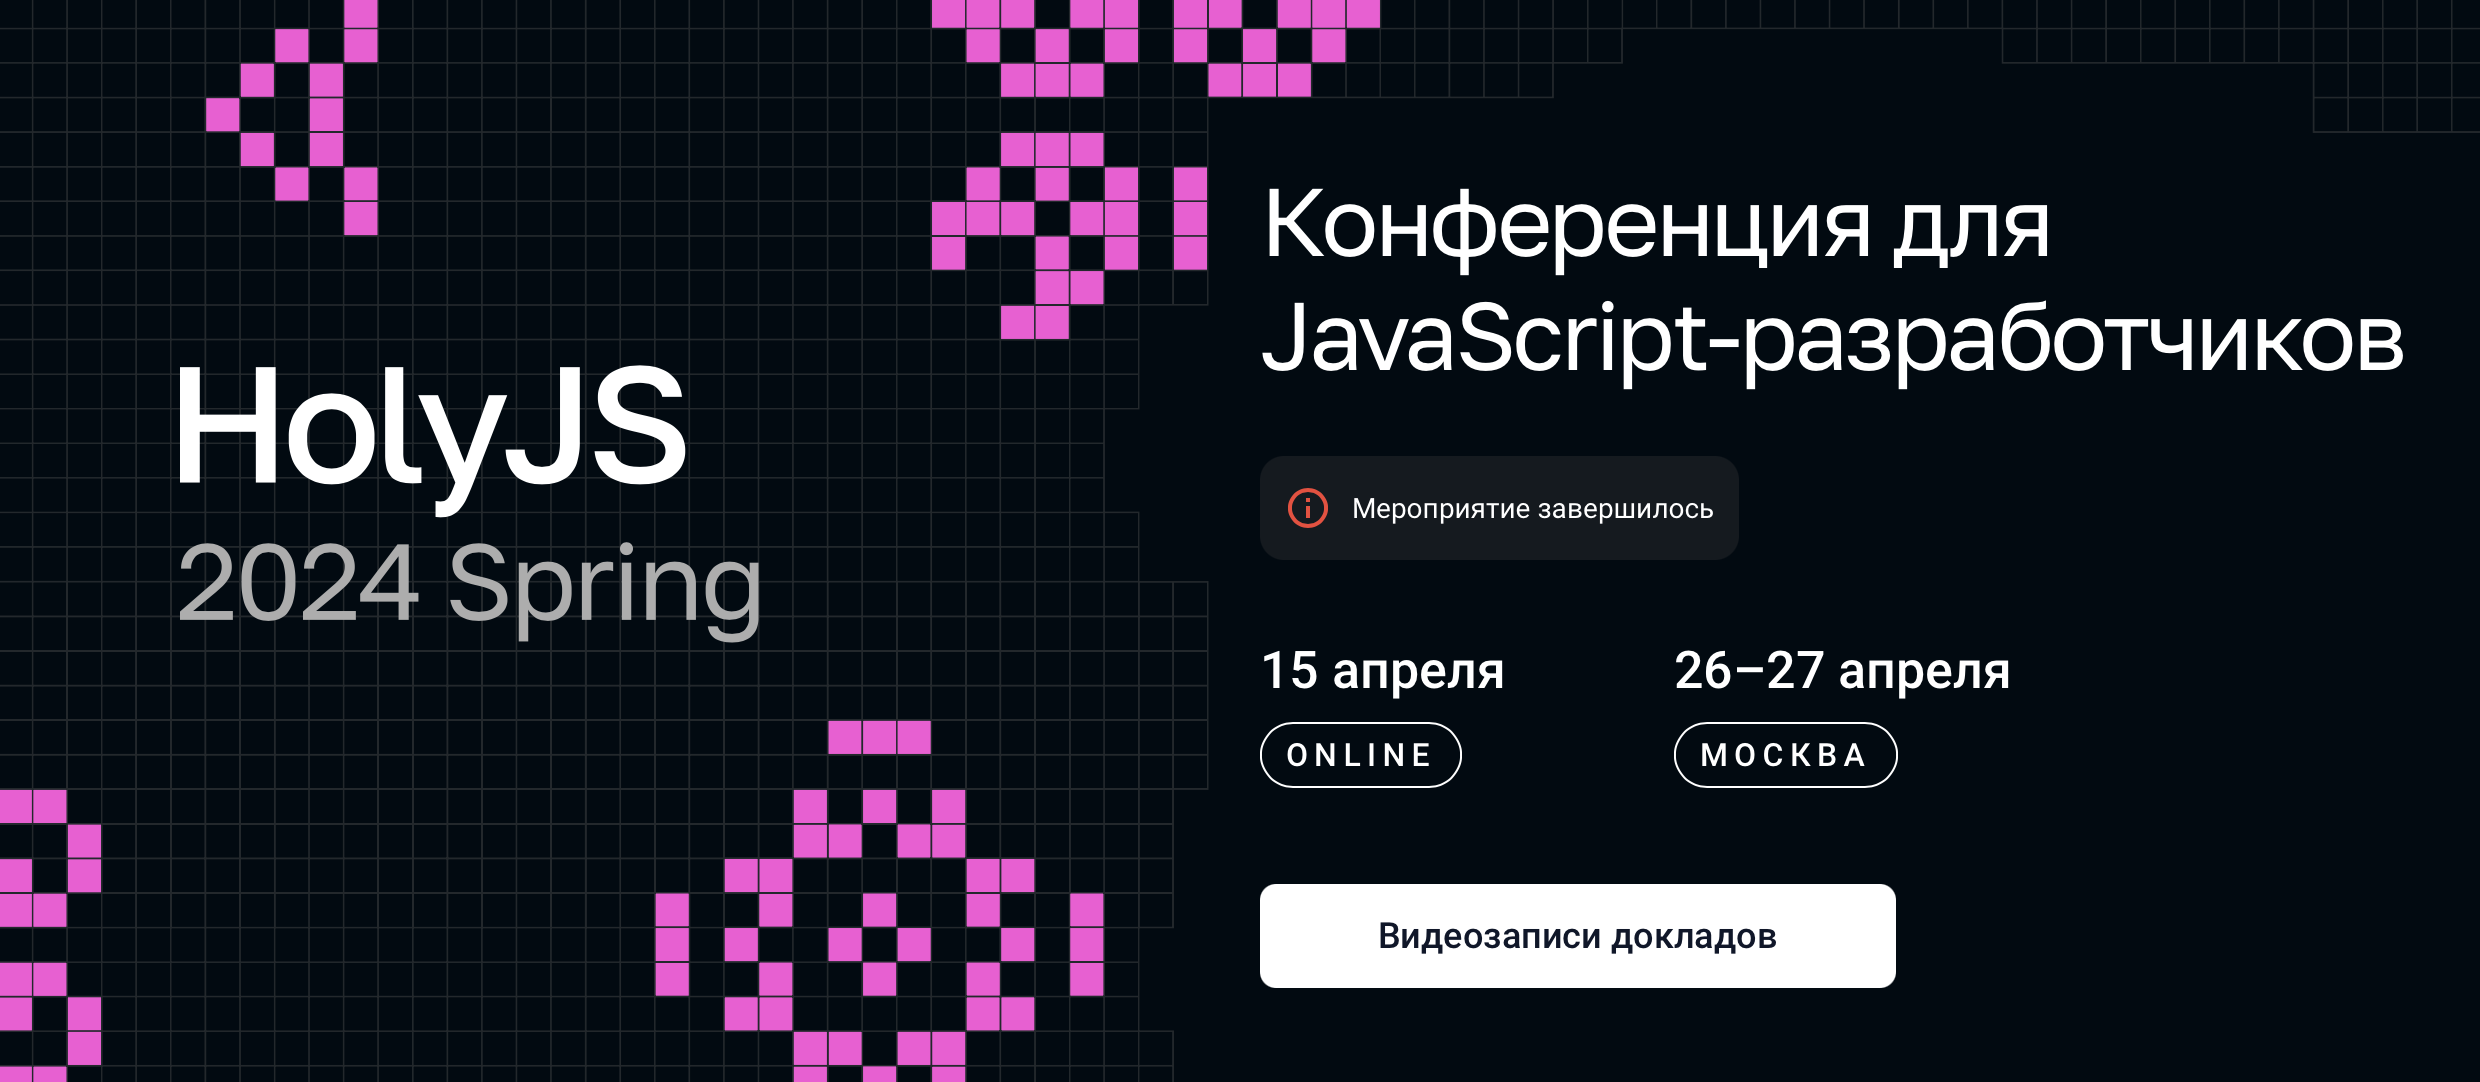 [JUG Ru Group] HolyJS 2024 Spring. Конференция для JavaScript‑разработчиков